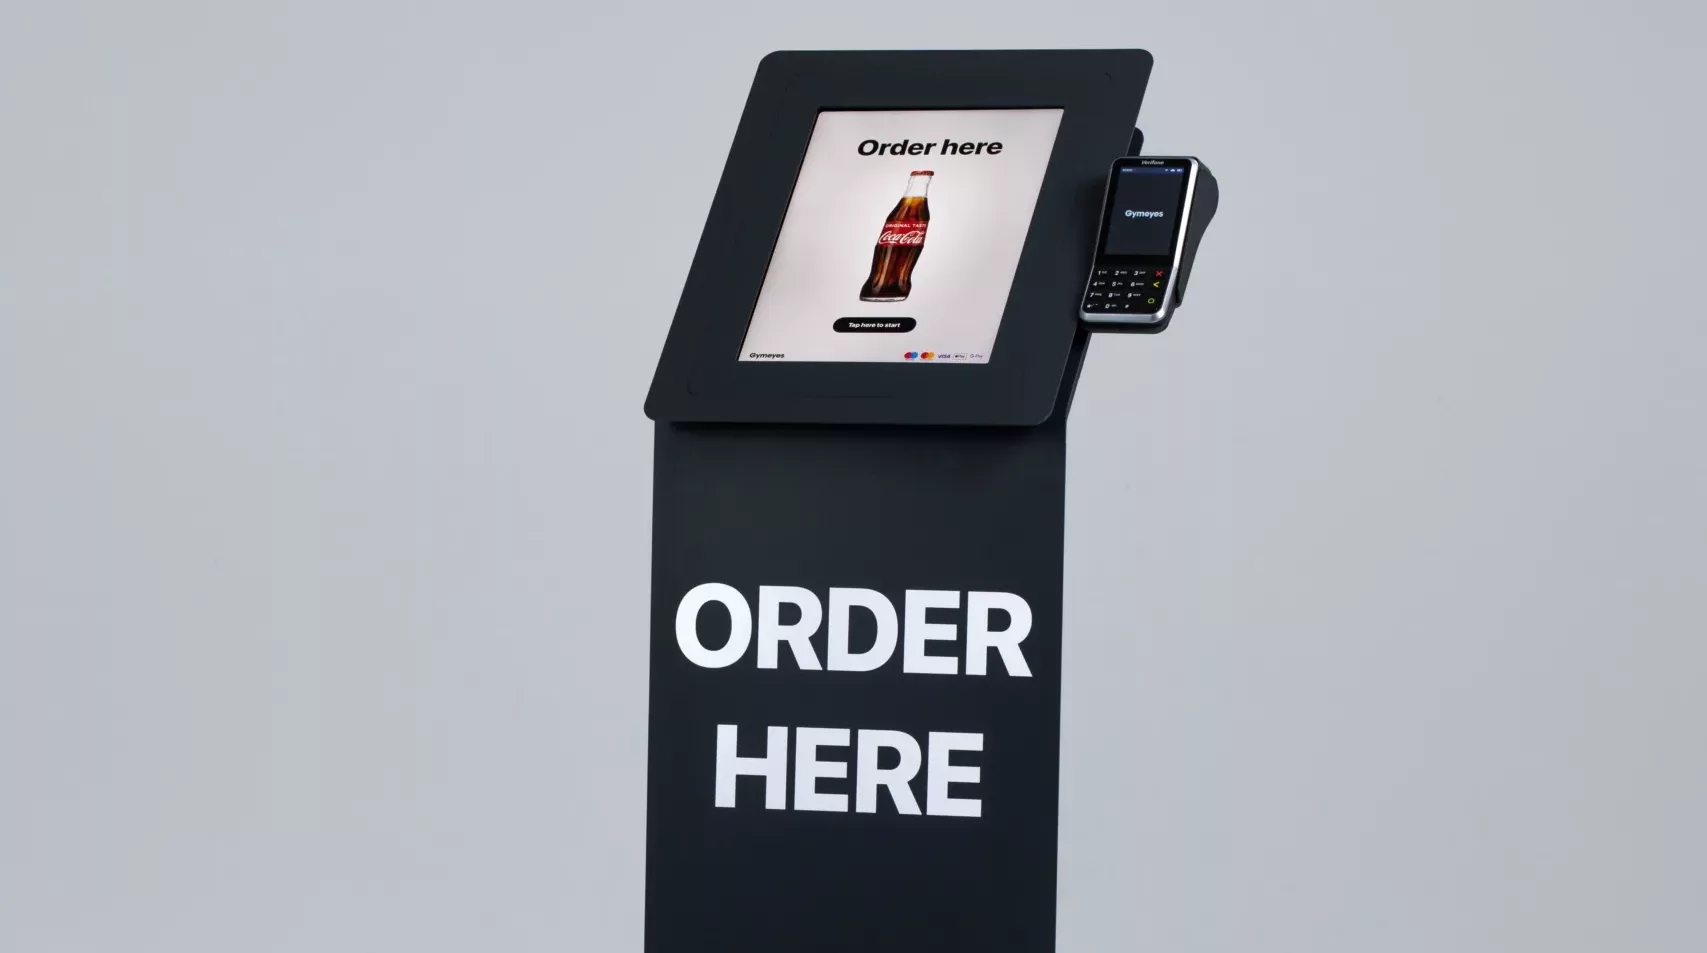 Order here self-service kiosk